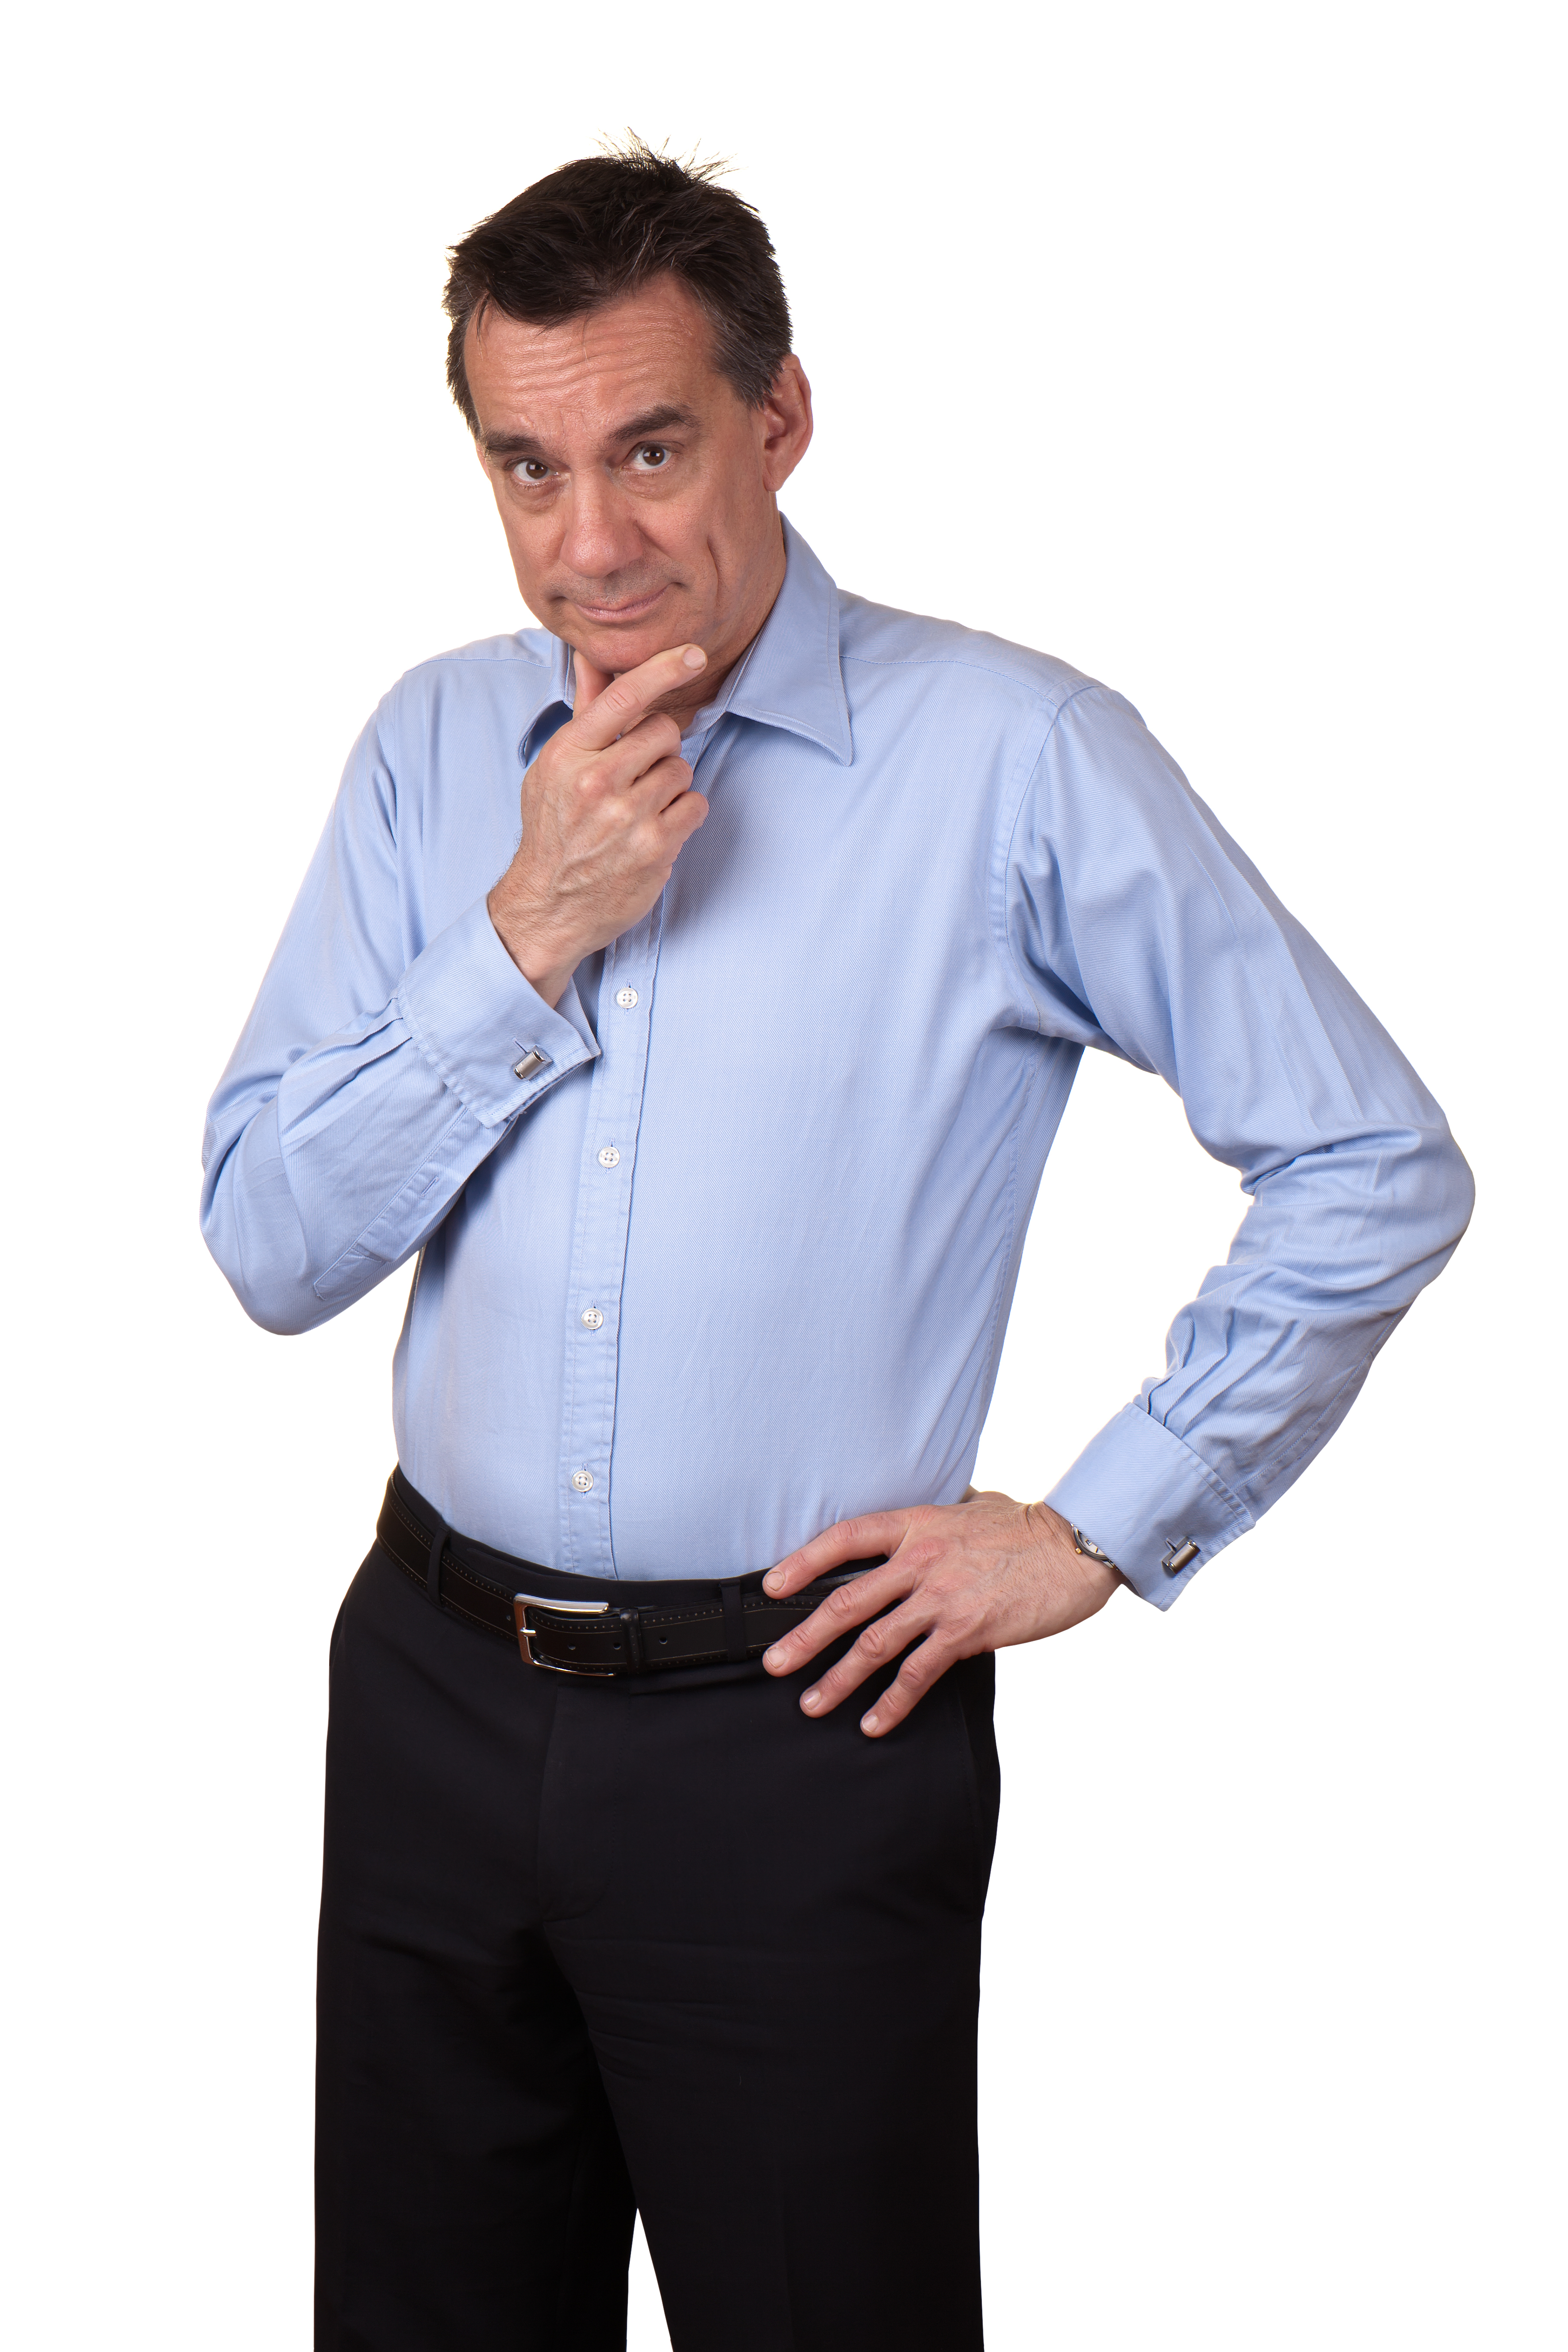 Mann mittleren Alters reibt sich das Kinn | Quelle: Shutterstock